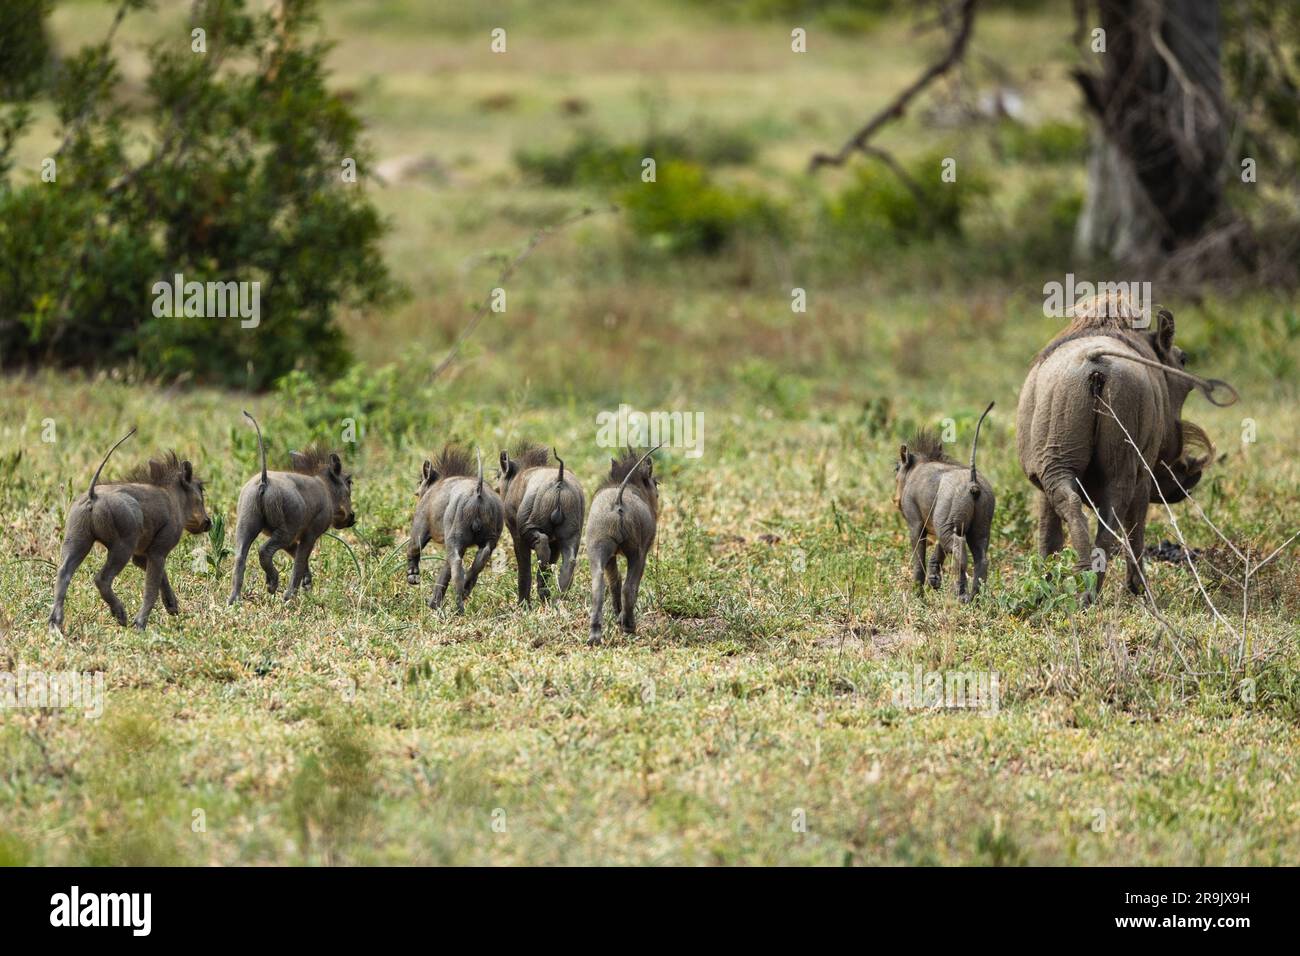 Warthog piglets, Phacochoerus africanus, running together through short grass. Stock Photo